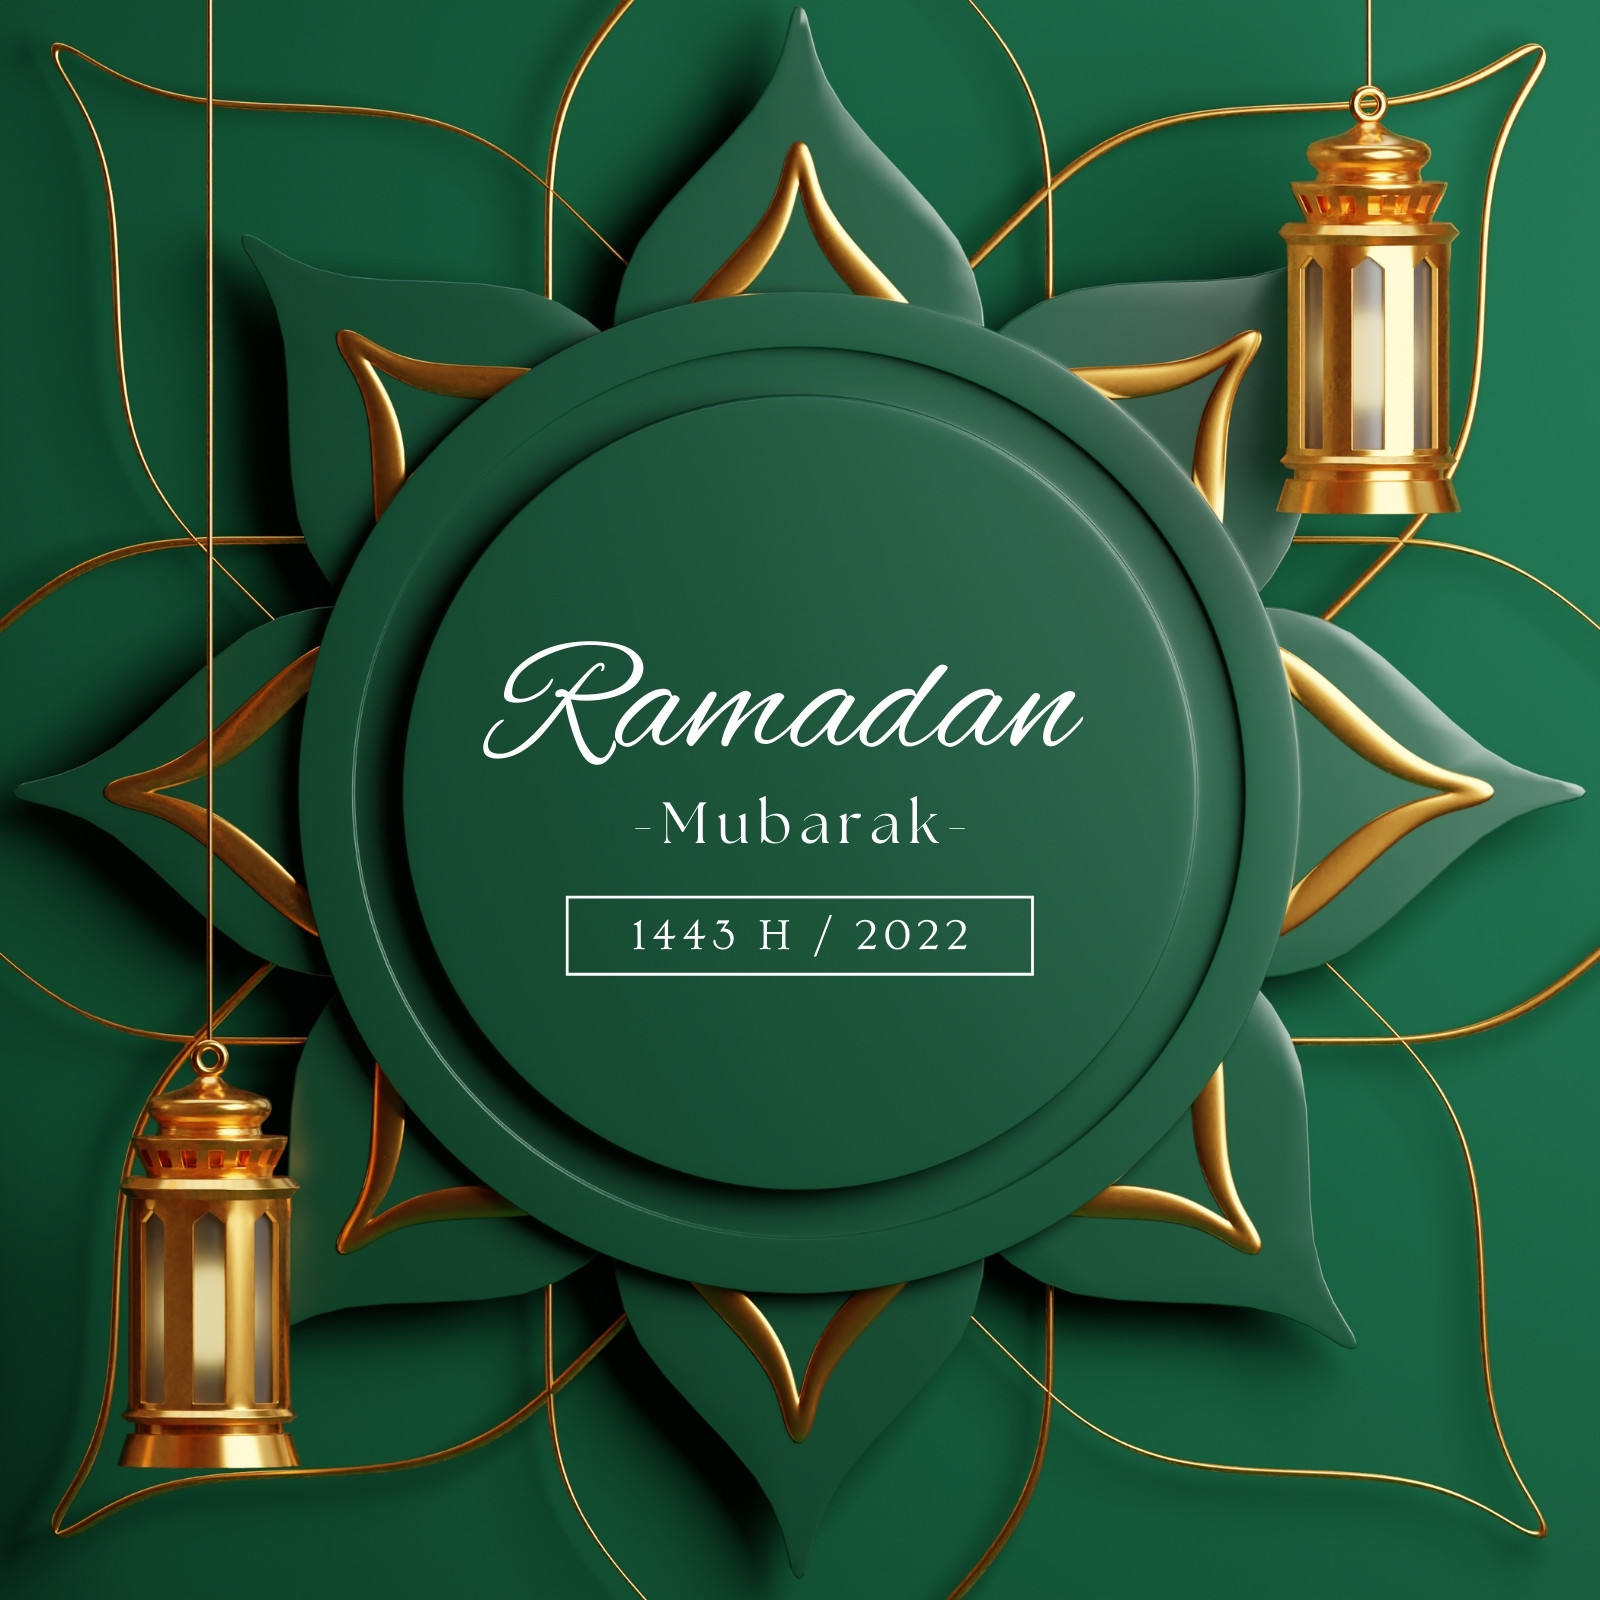 Ramadan Mubarak Images 2023 - Ramzan Wallpaper Download 2023